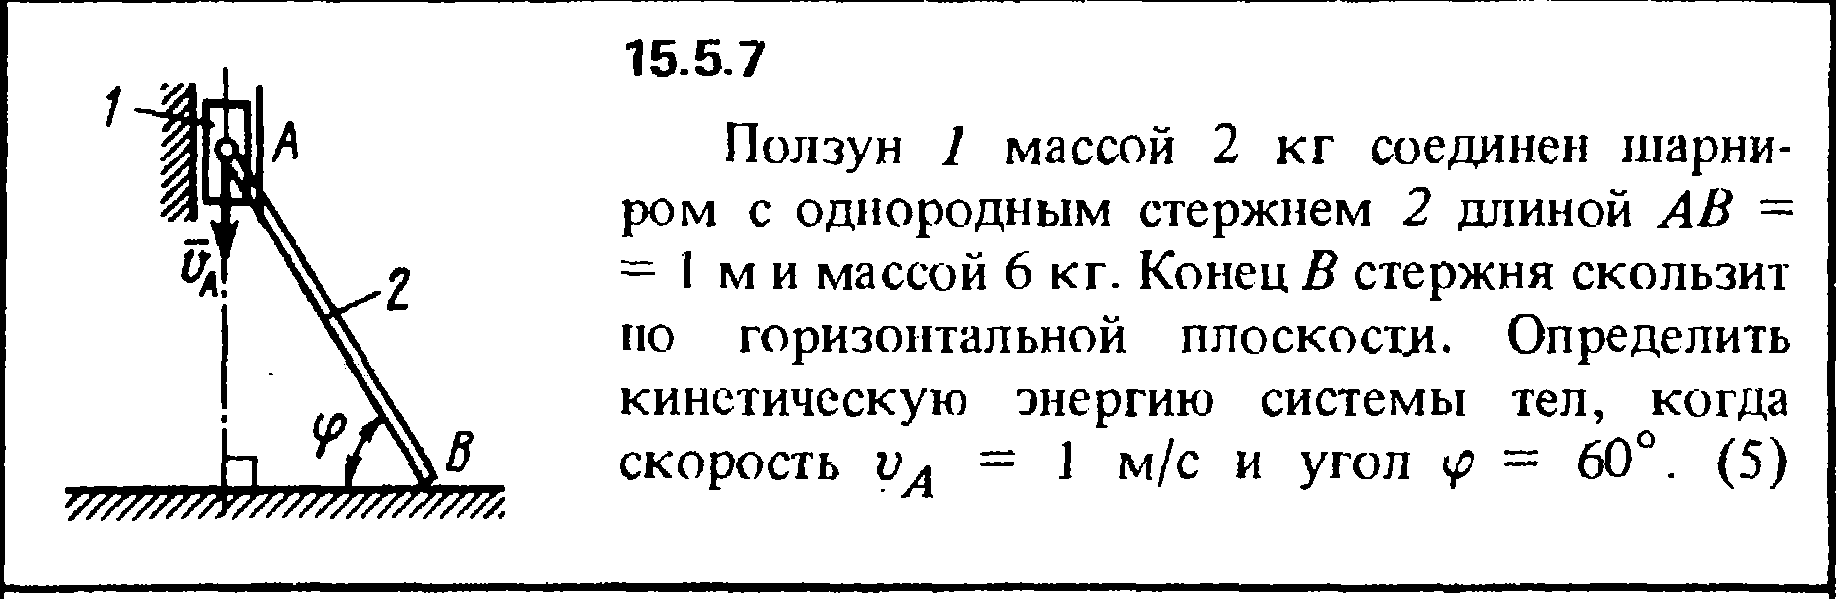 Решение задачи 15.5.7 из сборника Кепе О.Е. 1989 года